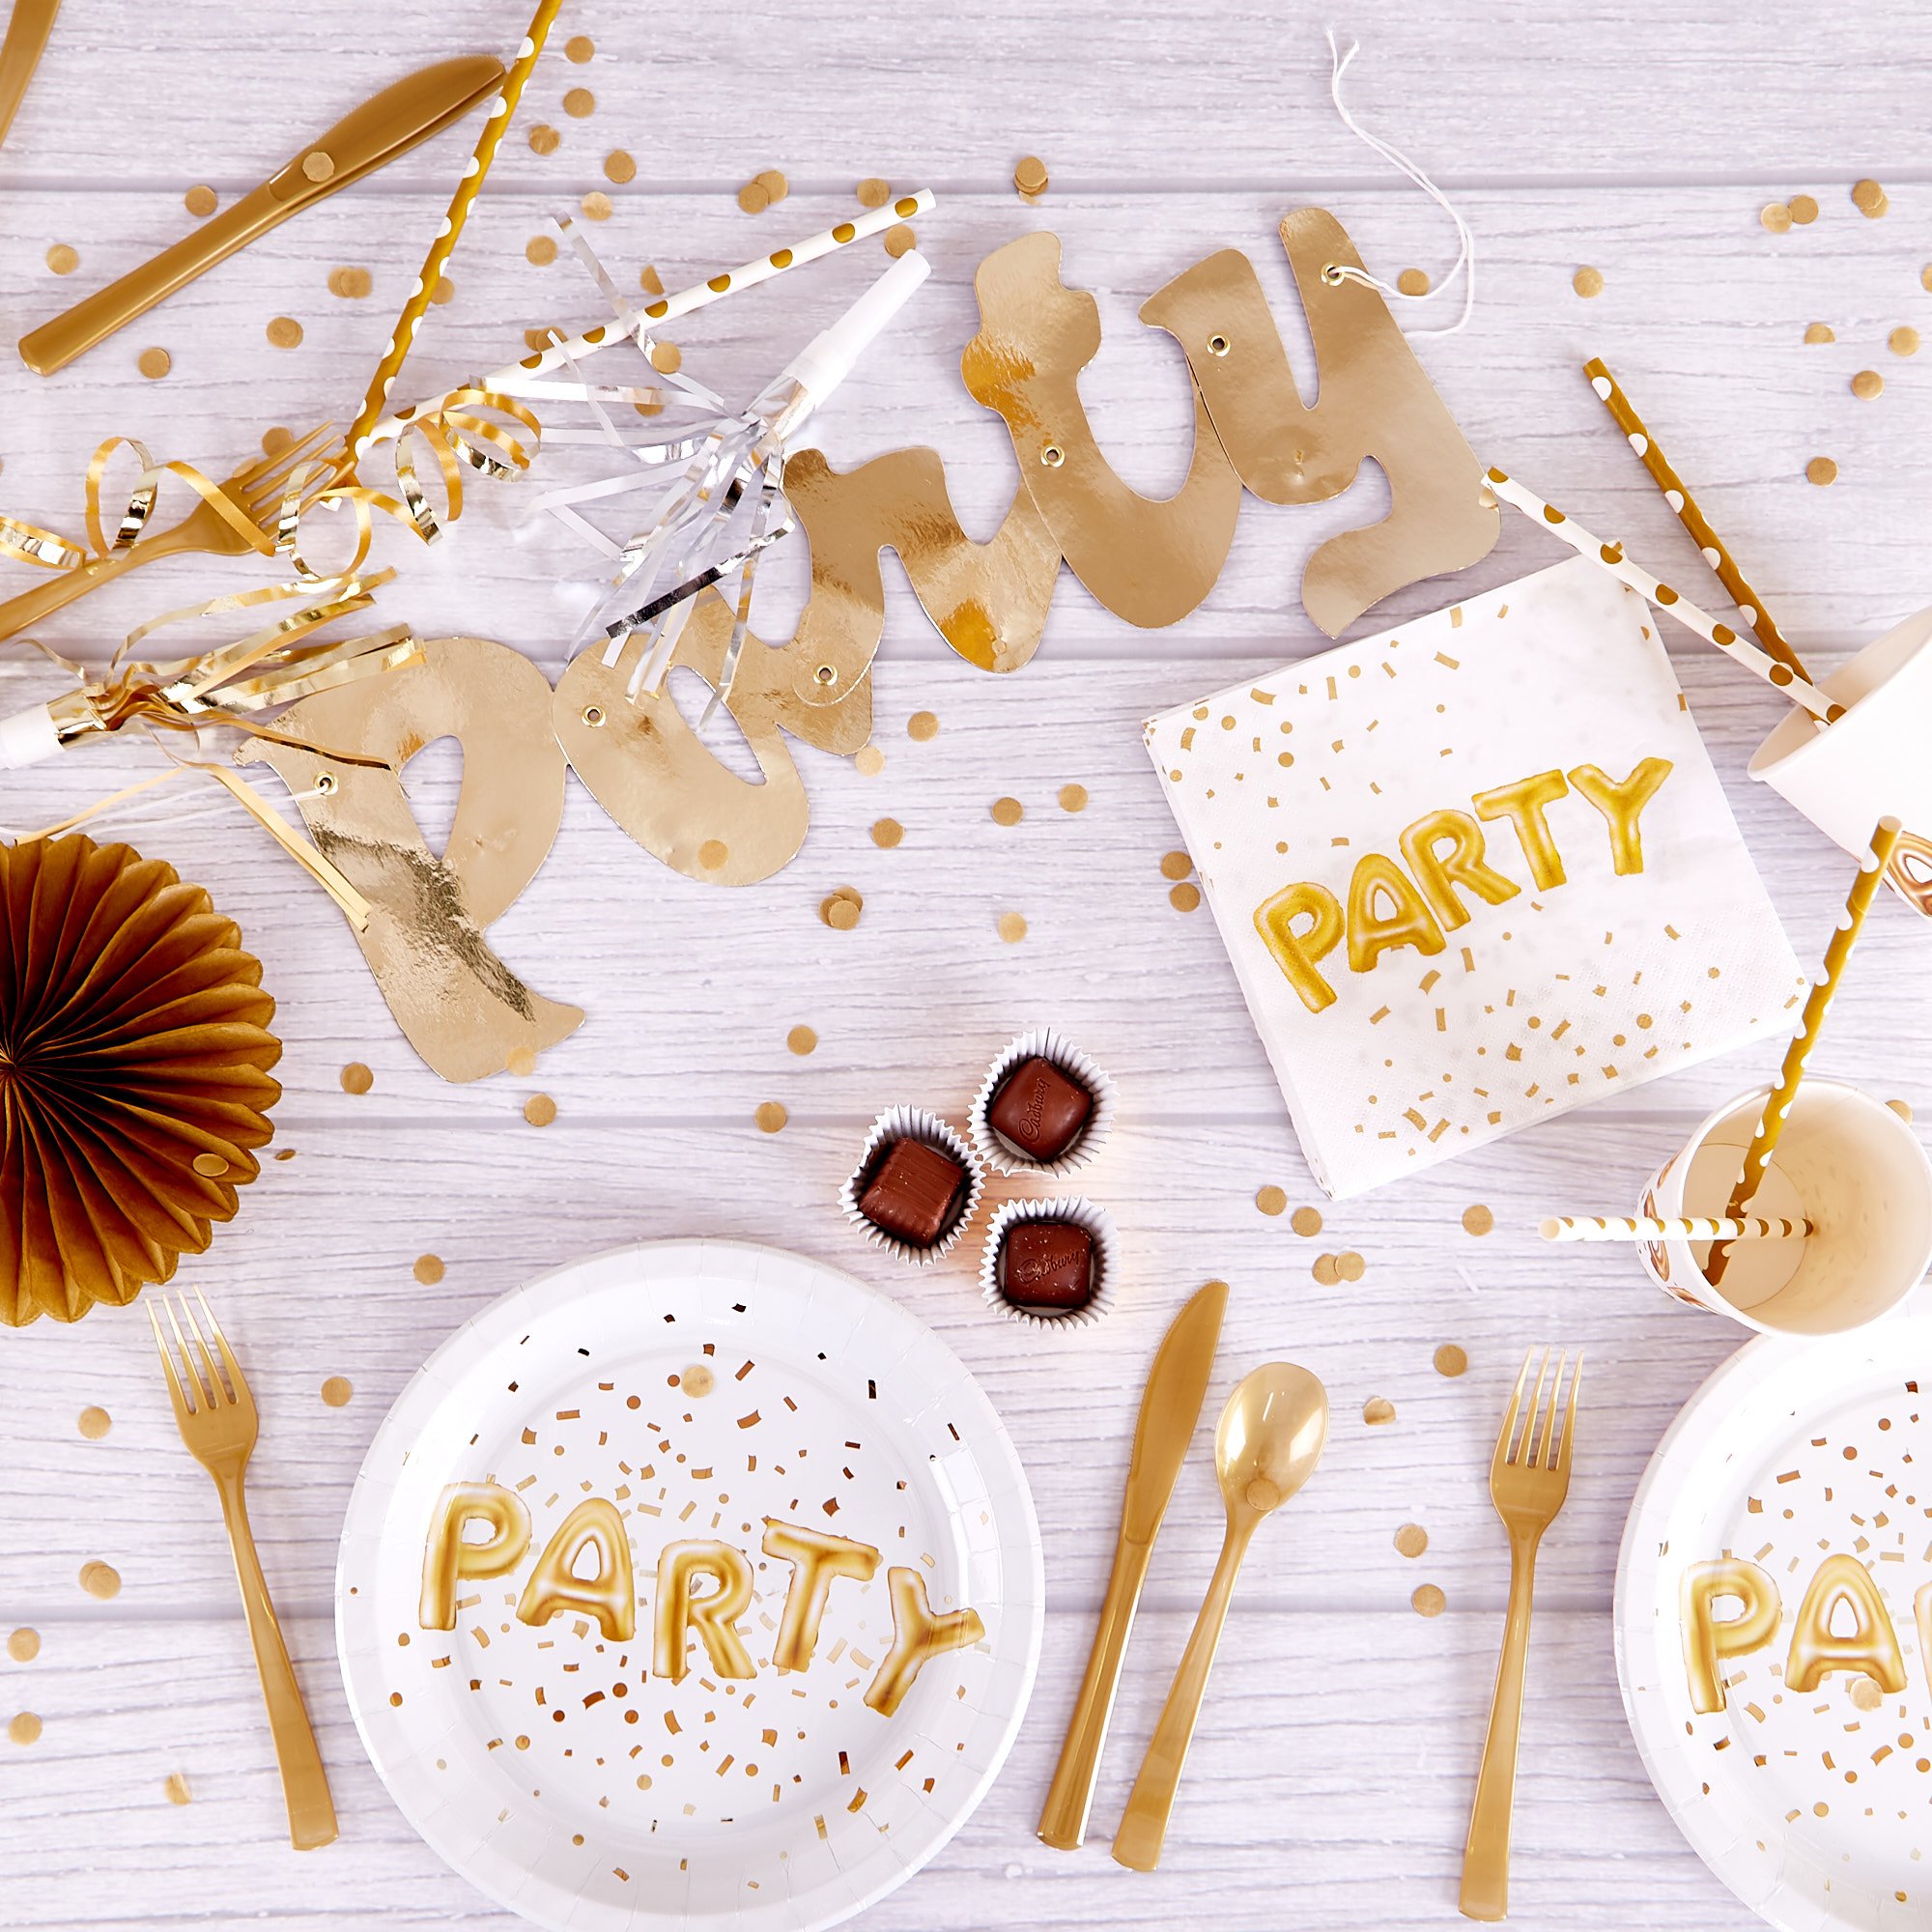 White & Gold-Themed Birthday Party Range